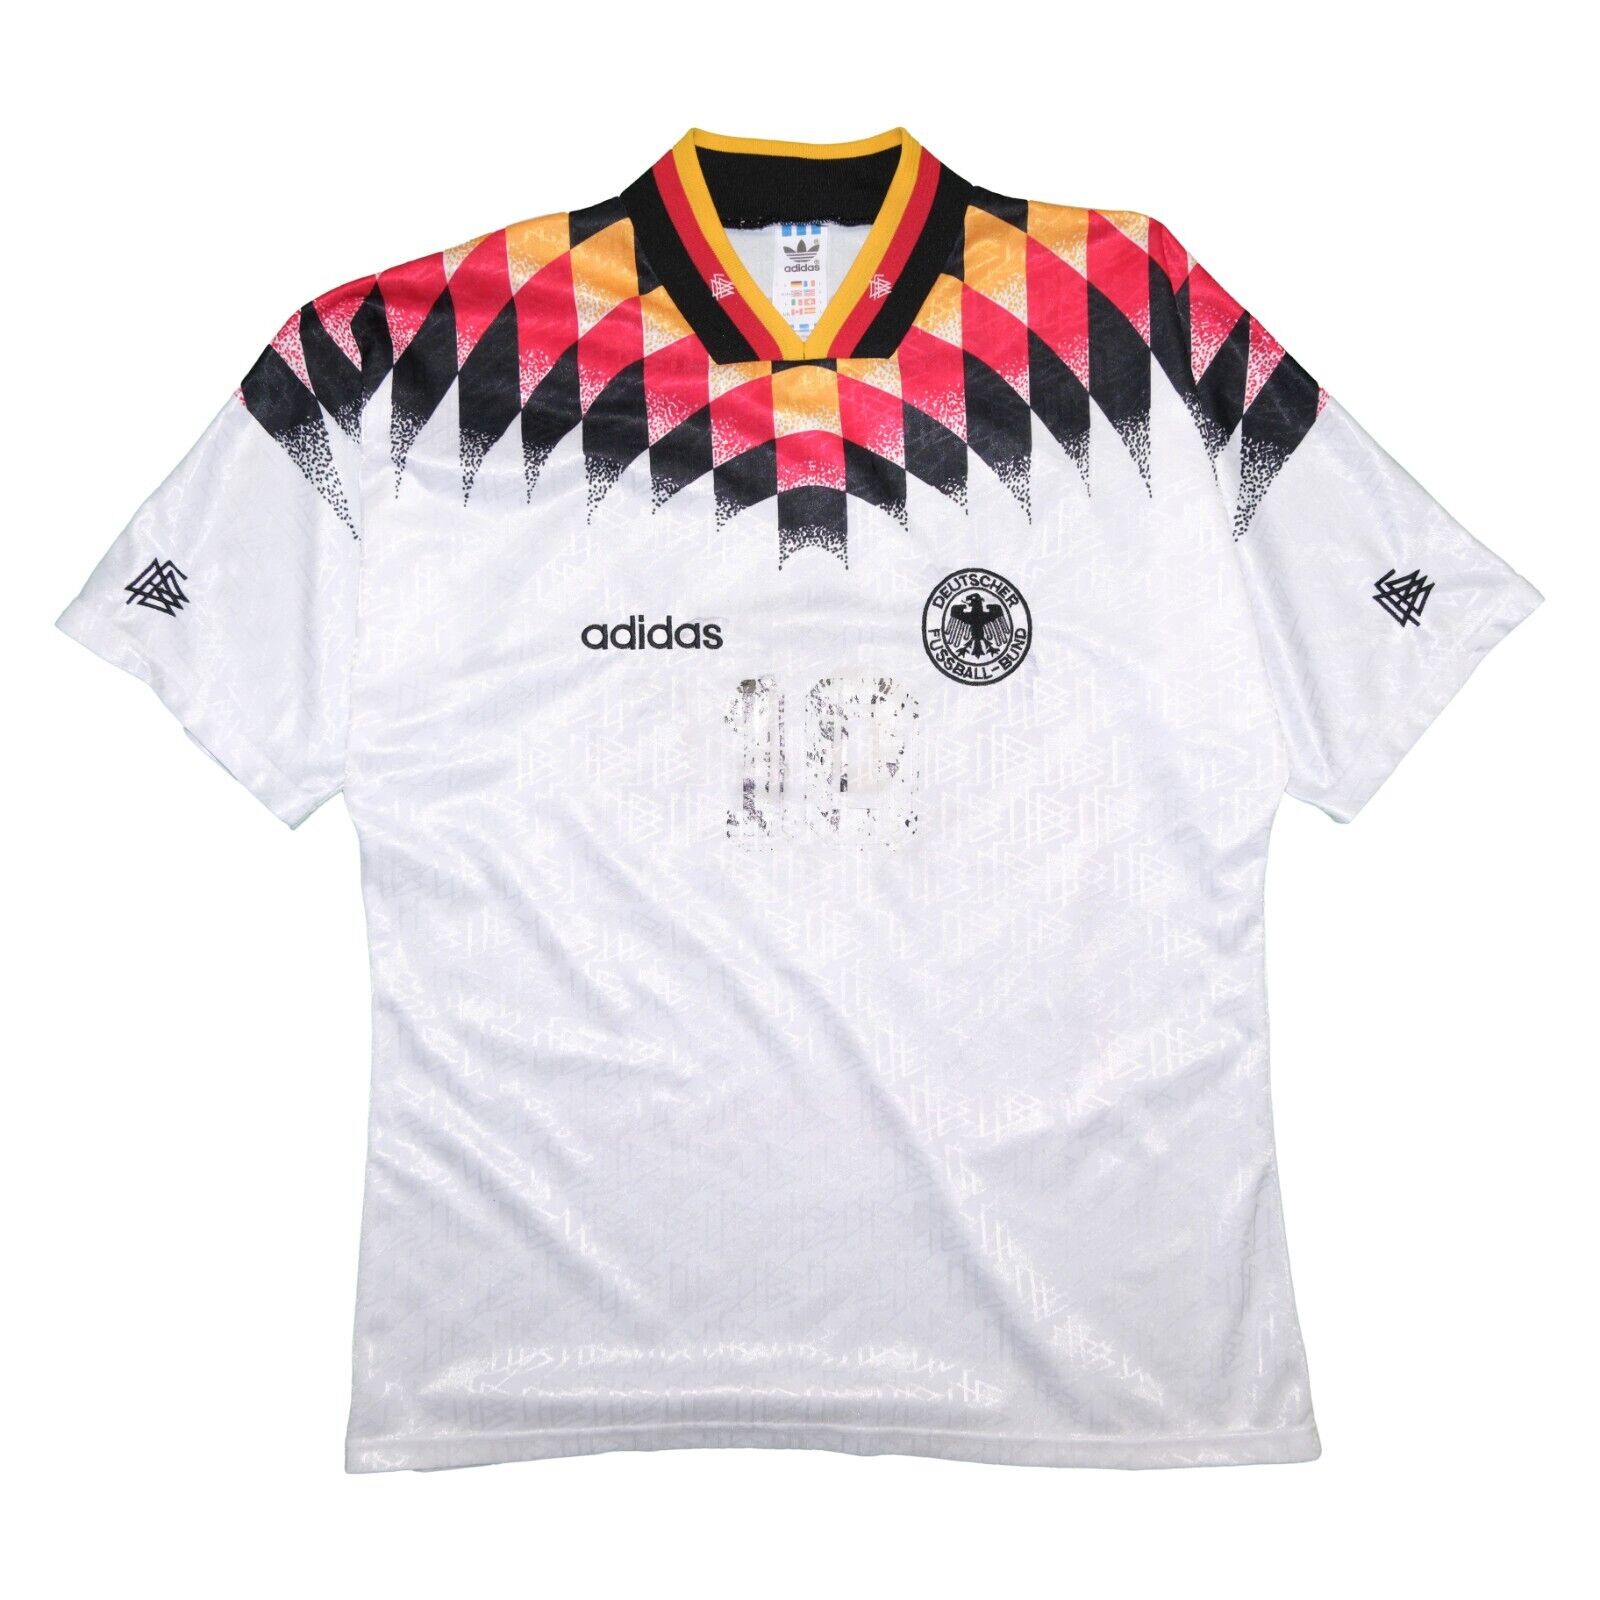 Vintage Germany Adidas Football Kit Size Large 1994 90s